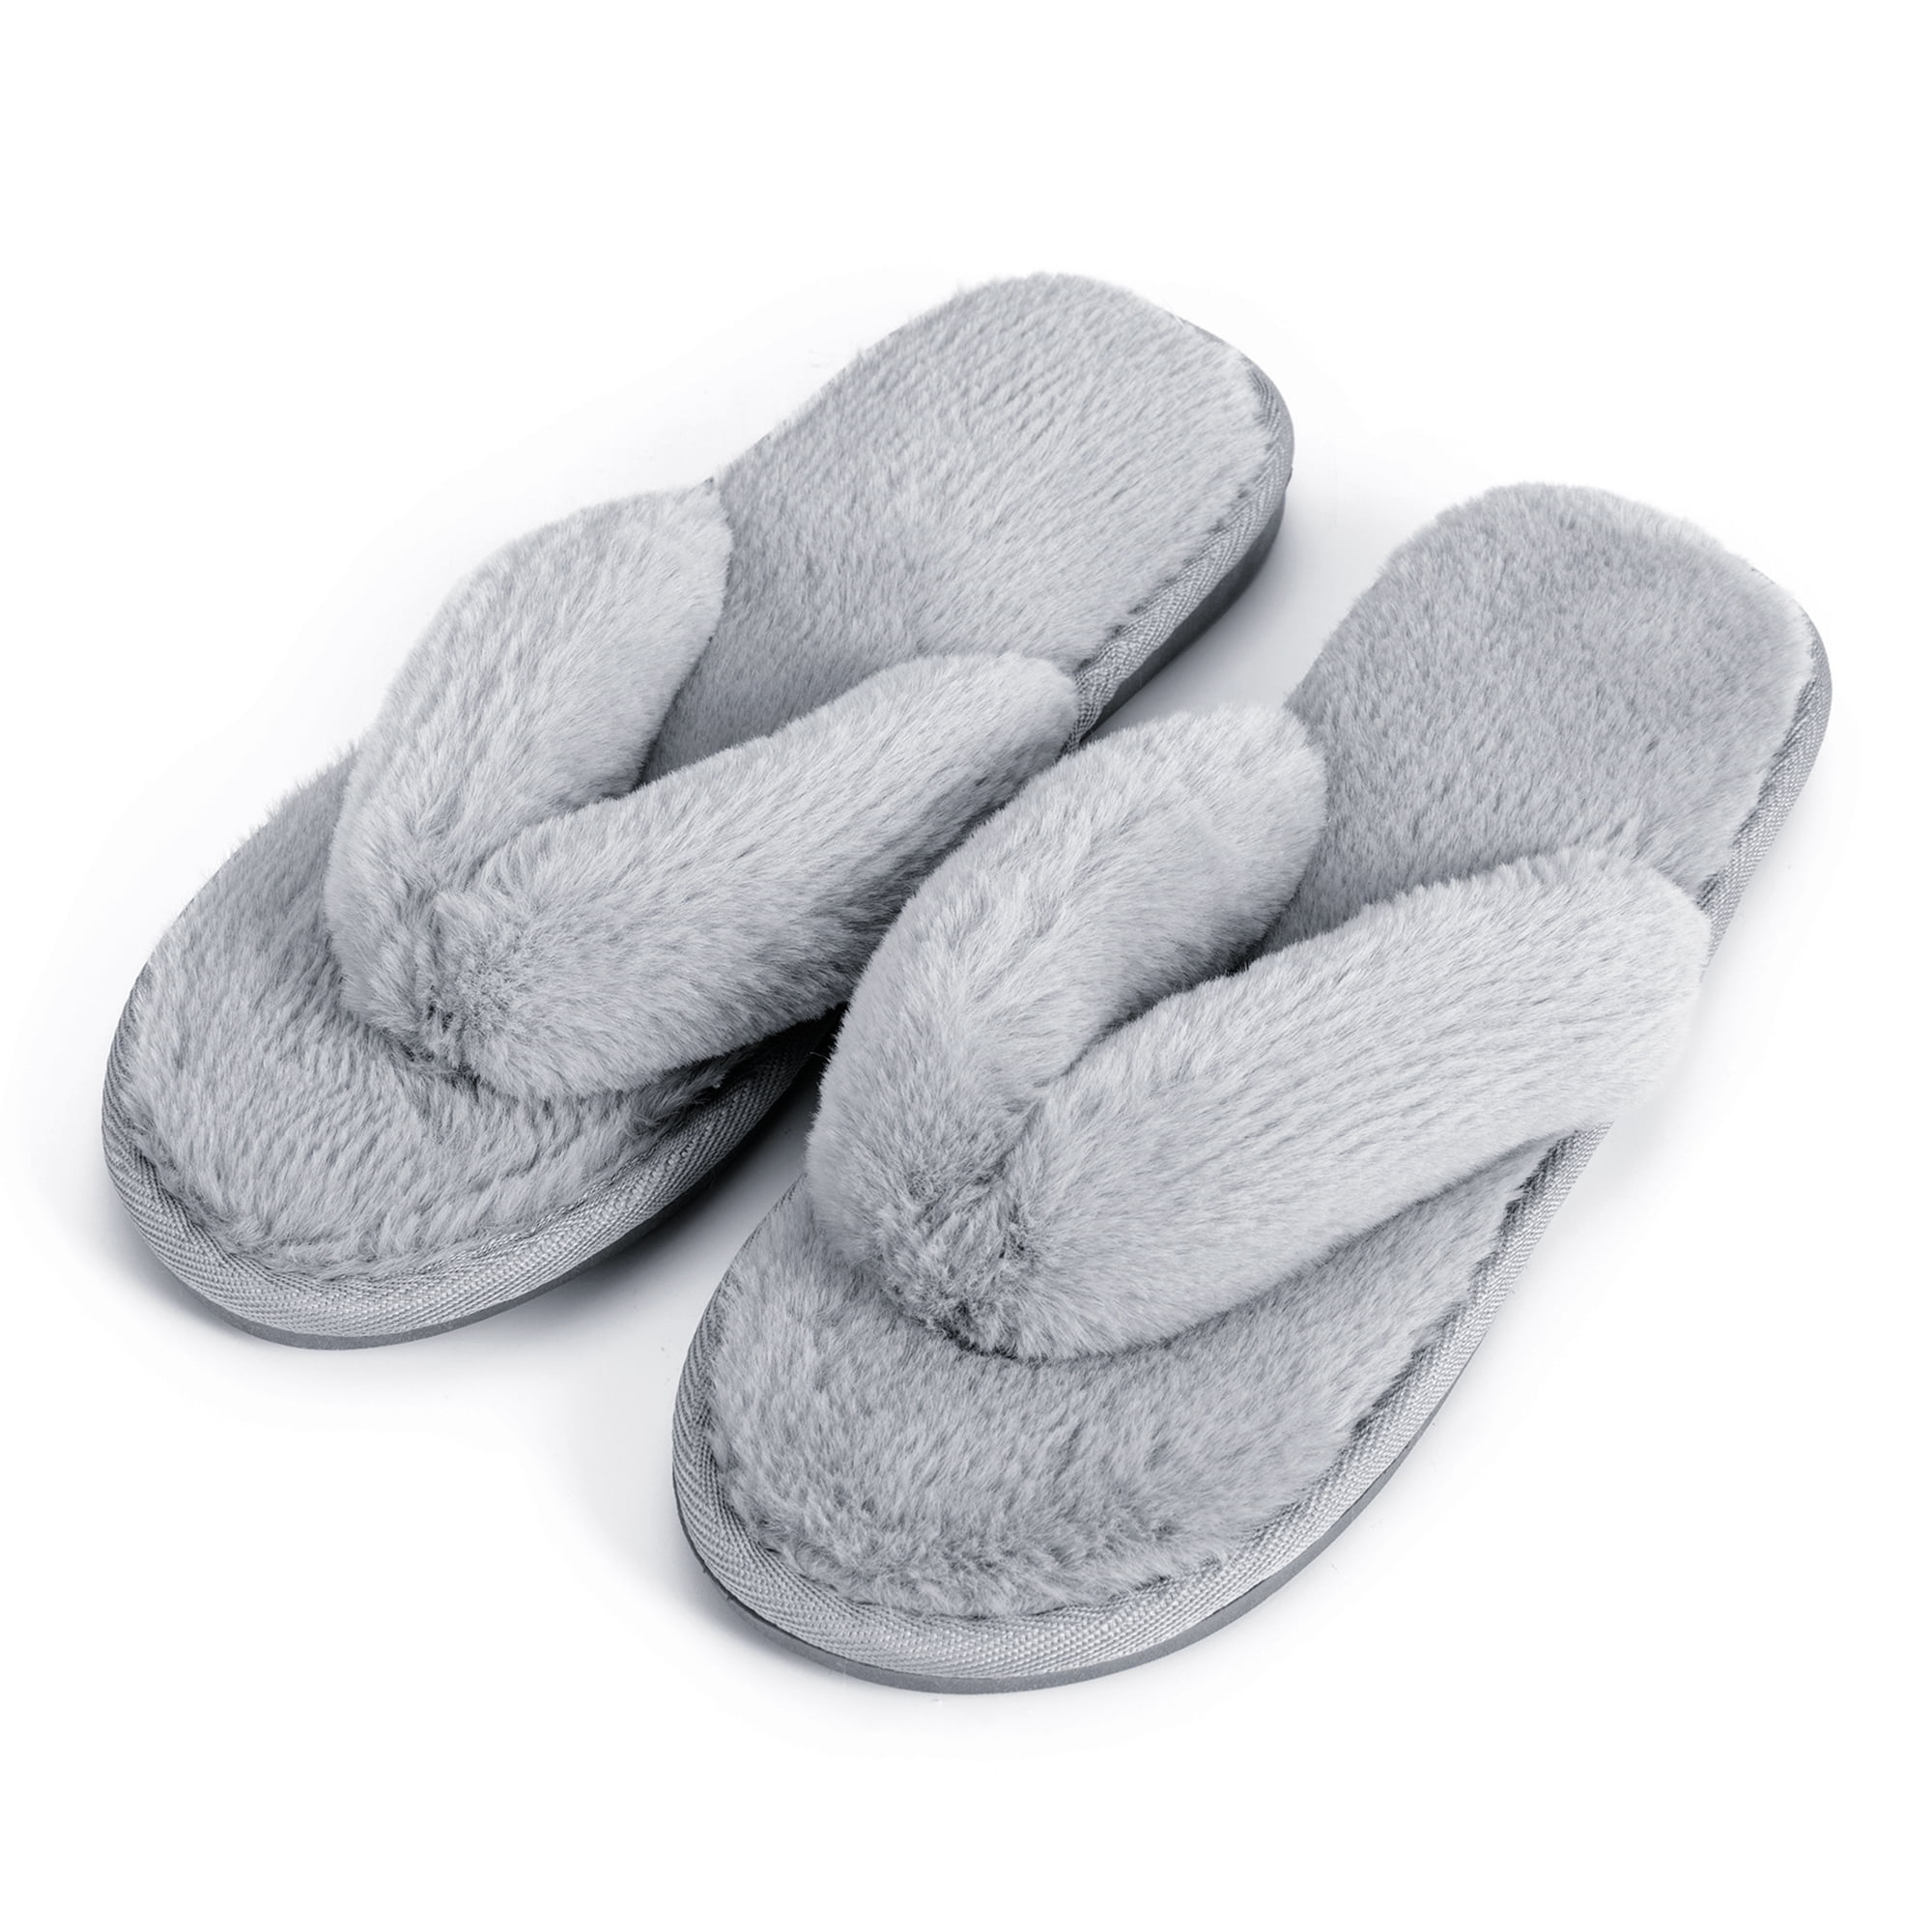 Fluffy Fur Slippers Soft Plush Non-slip Women's Slippers Flip-Flop Sandals Shoes 